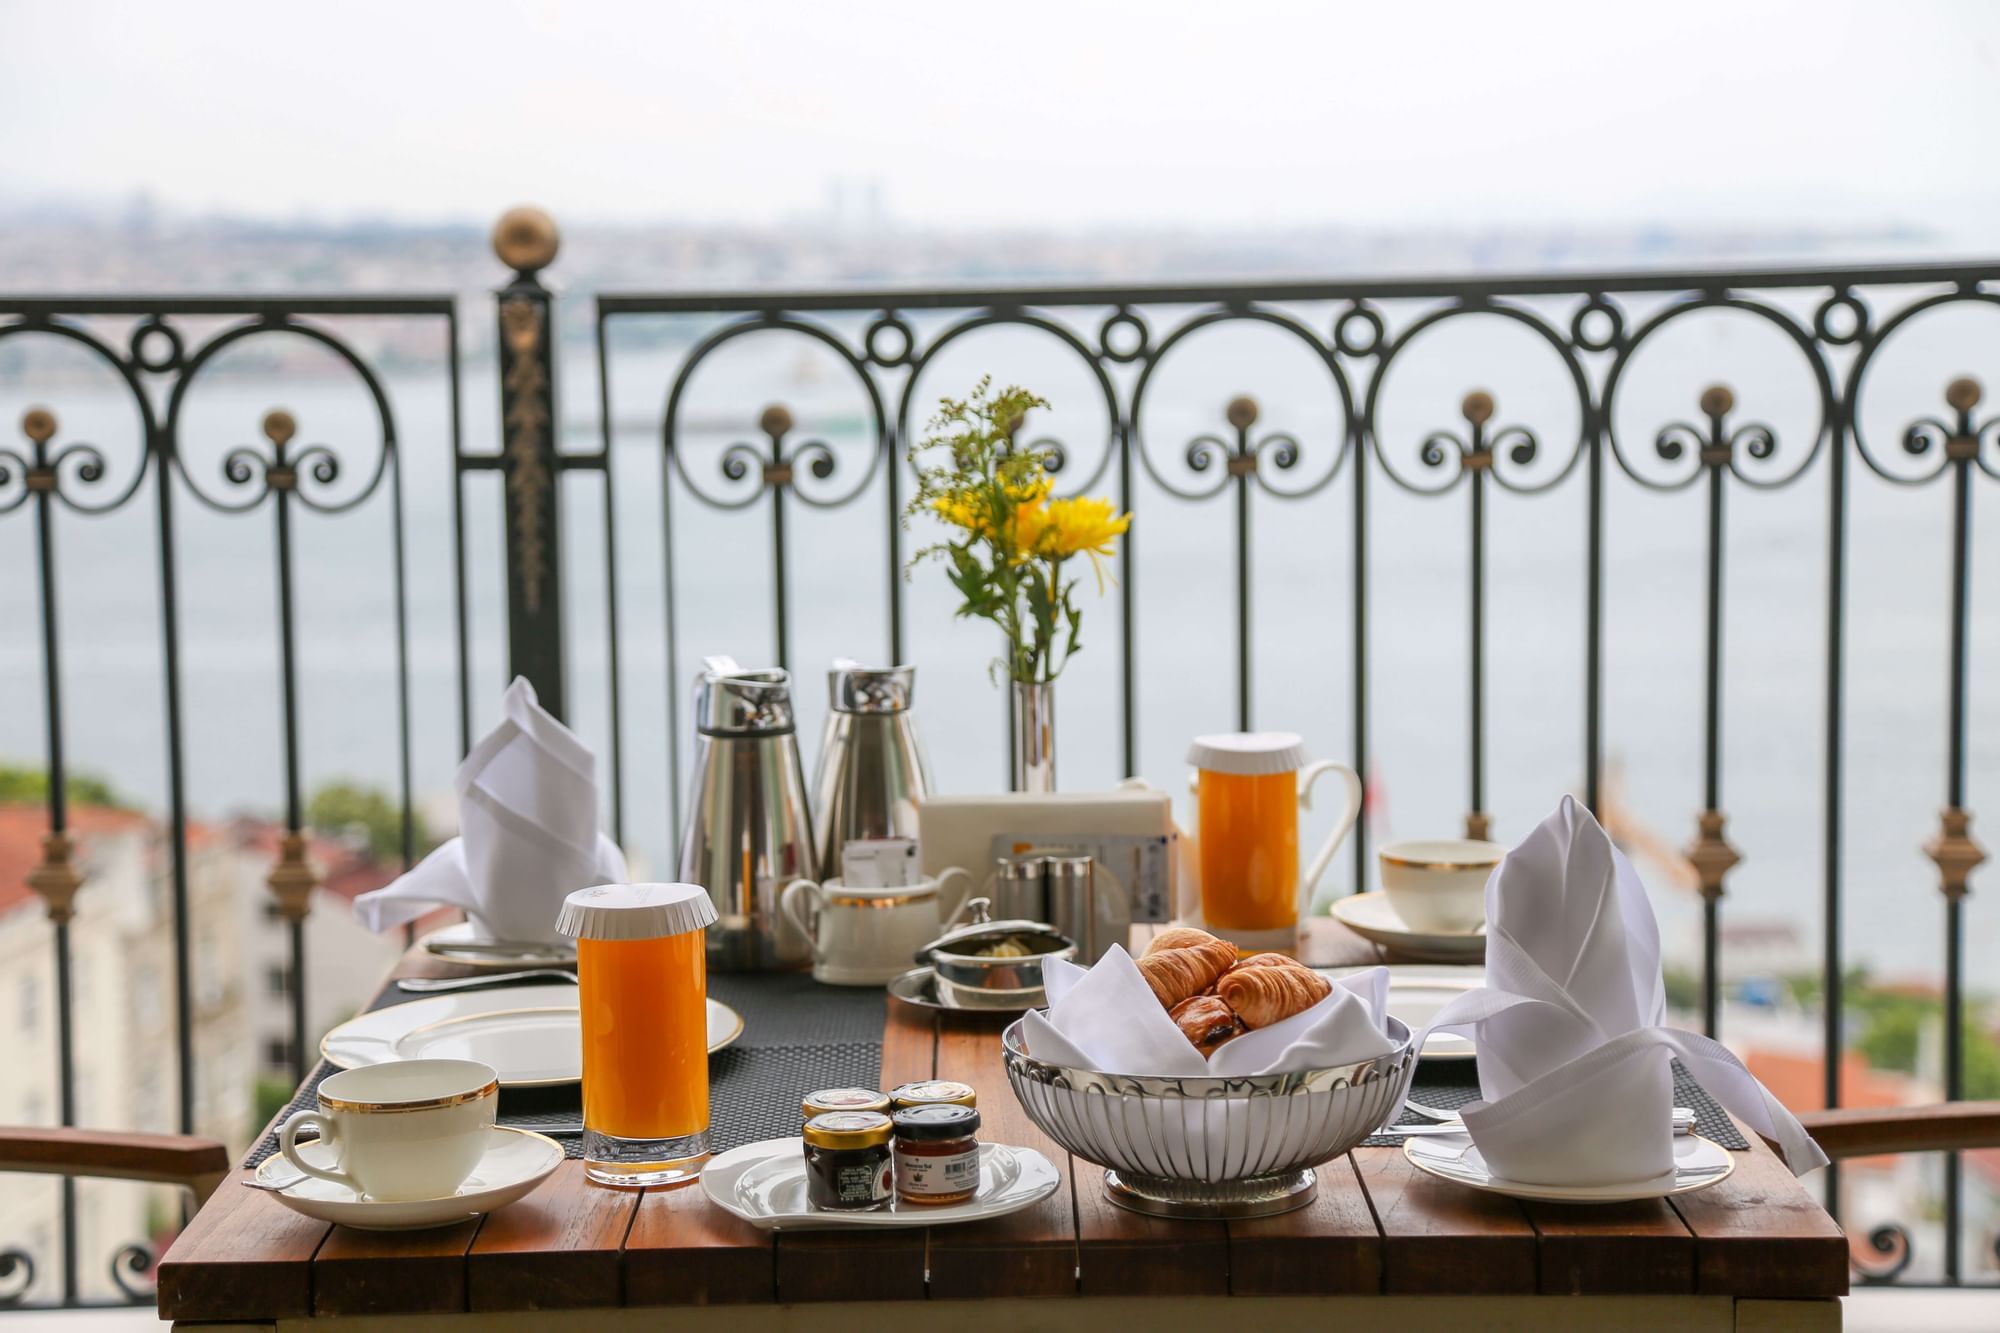 Breakfast served for 2 at CVK Park Bosphorus Hotel